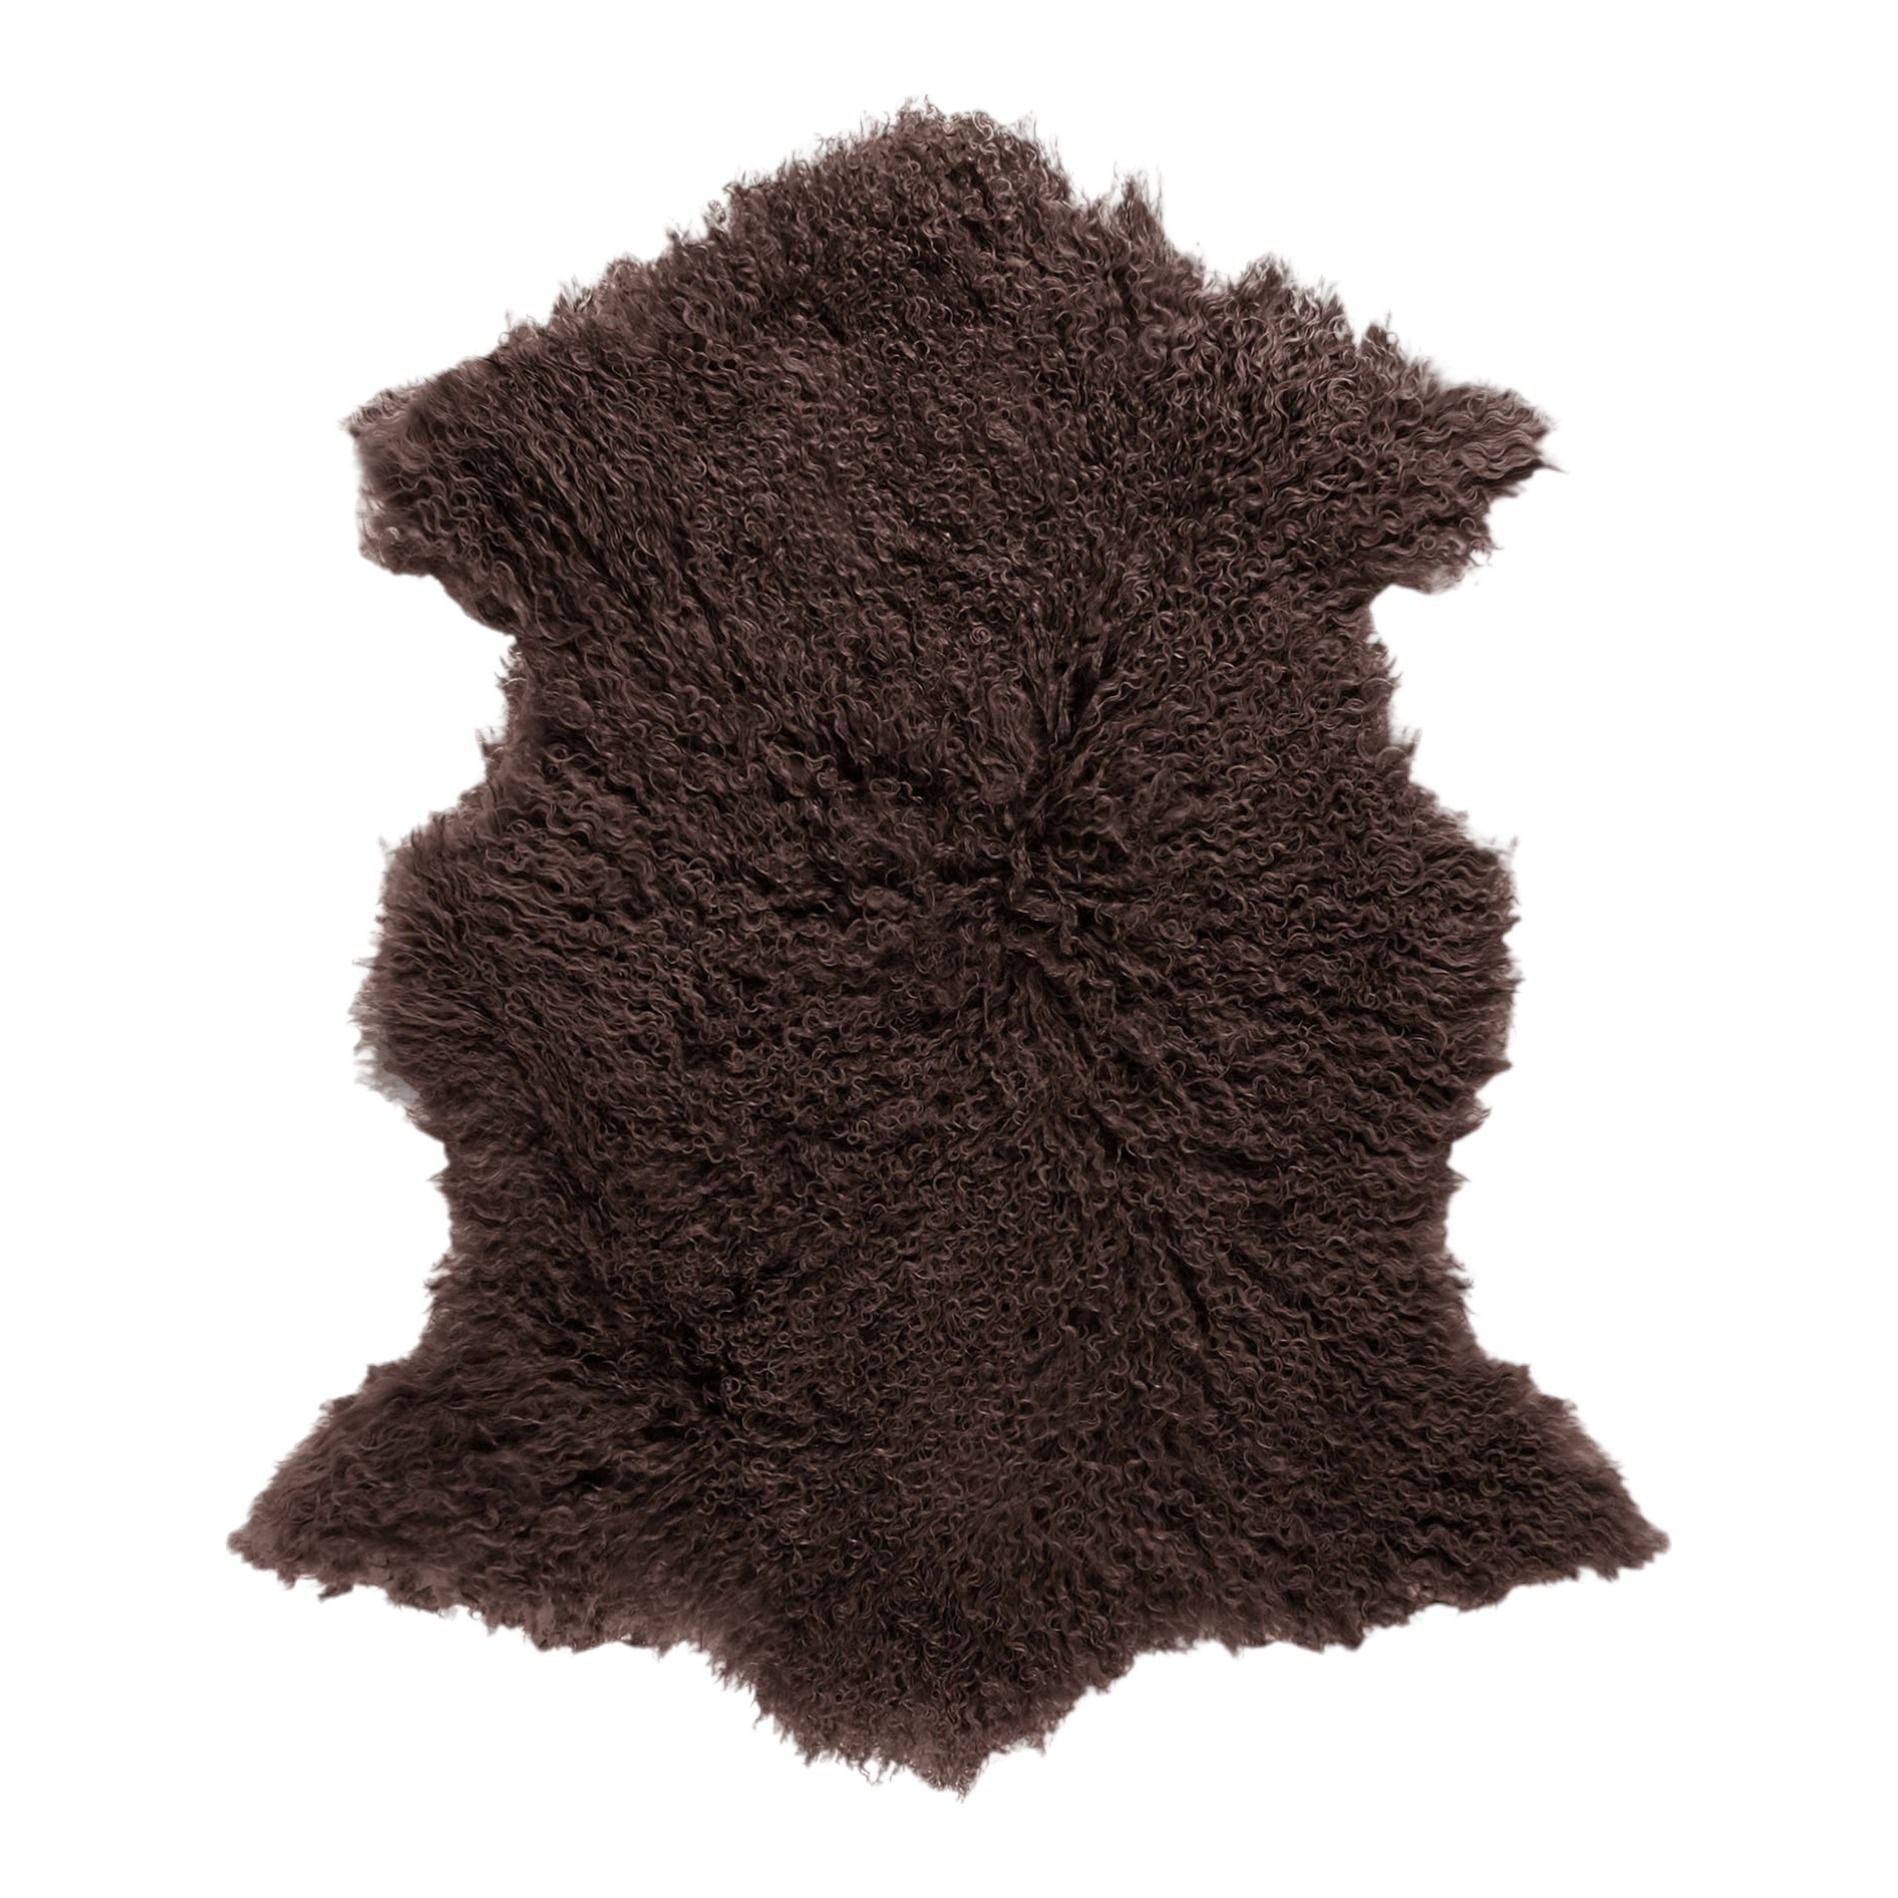 Коврик Henan Prosper Chocolate 90 см овчина темно-коричневый